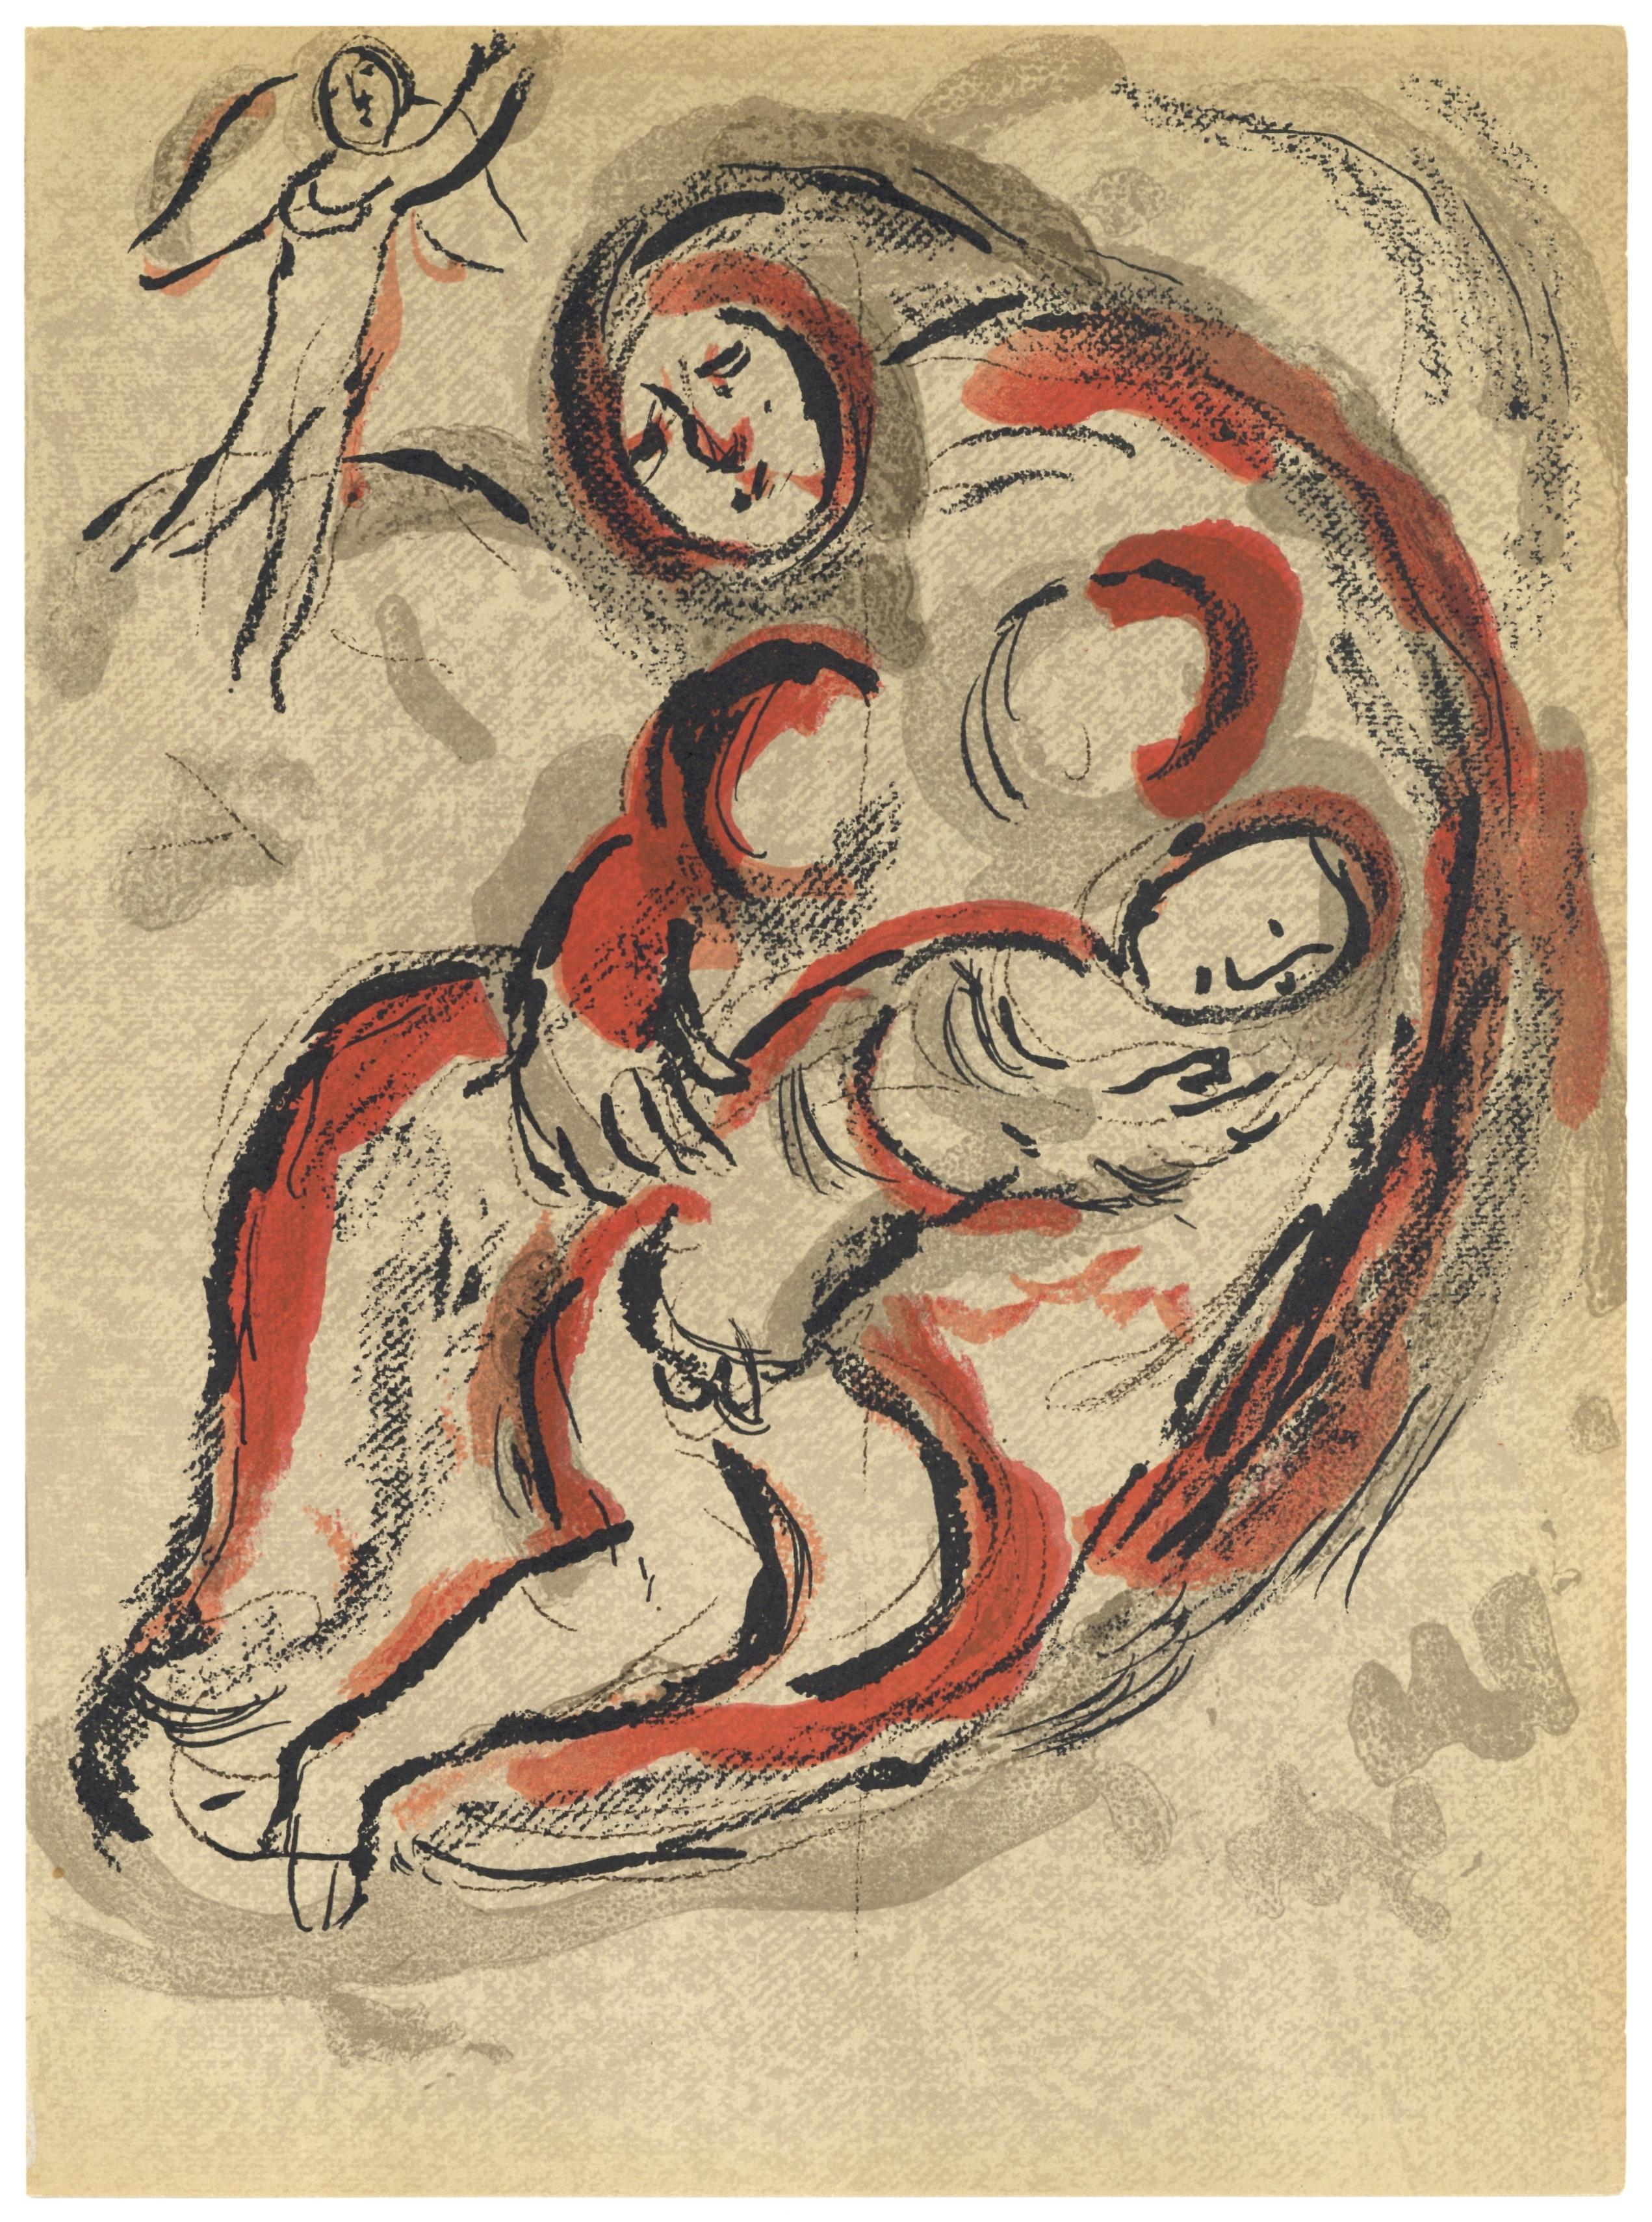 Marc Chagall Portrait Print - "Hagar in the Desert" original lithograph